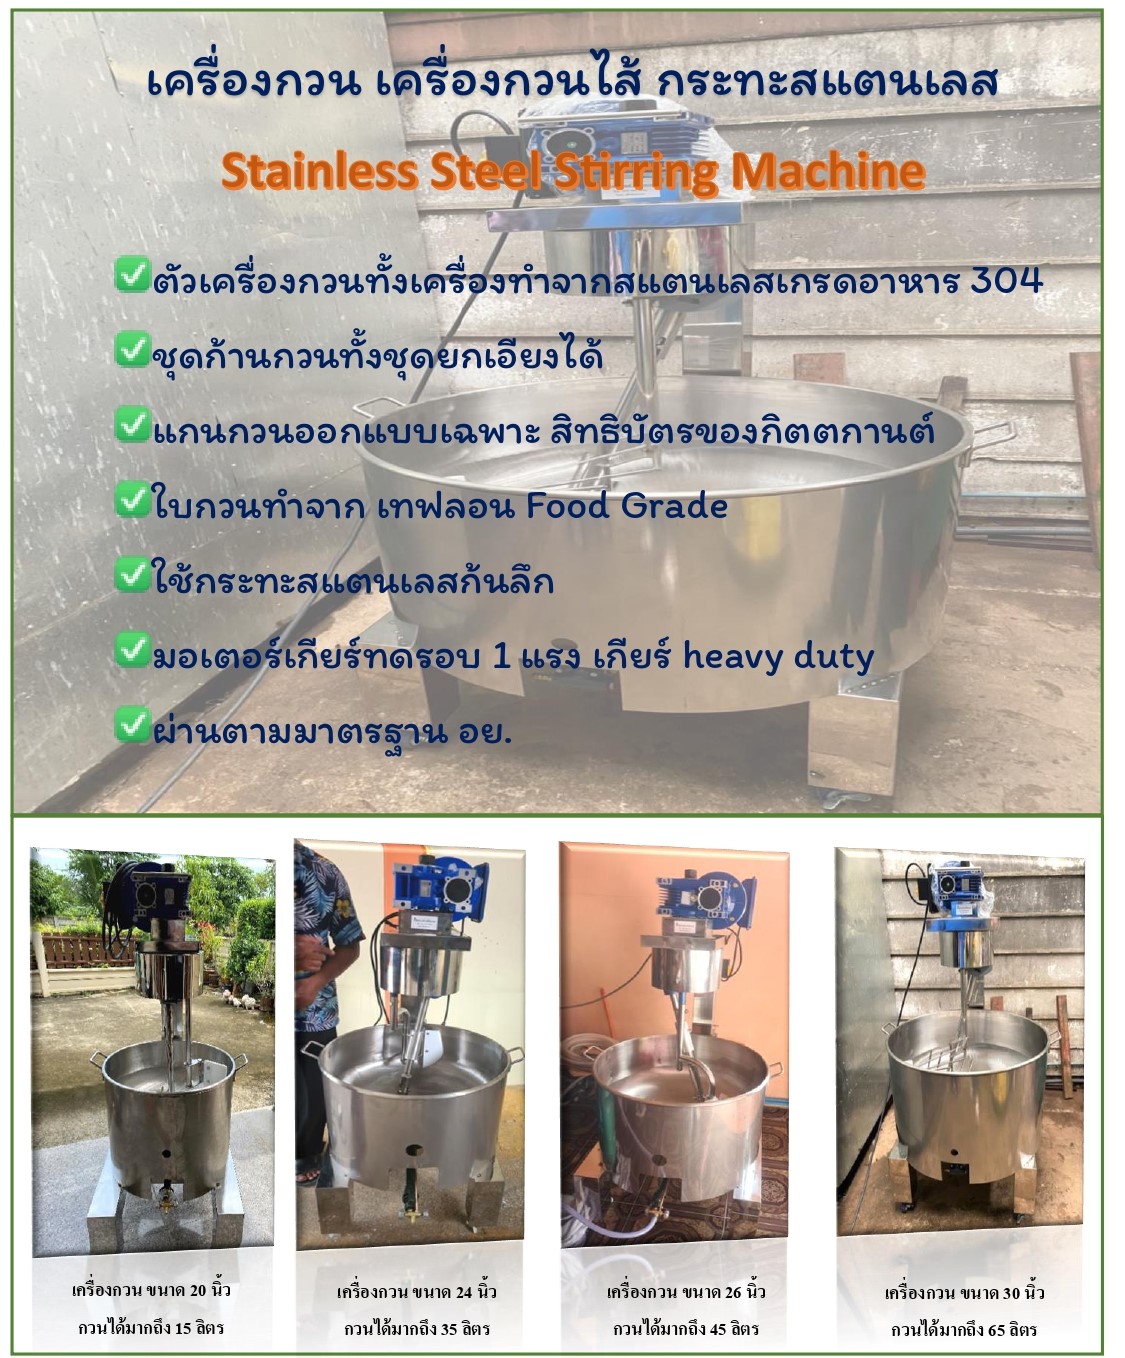 Stainless Steel Stirring Machine